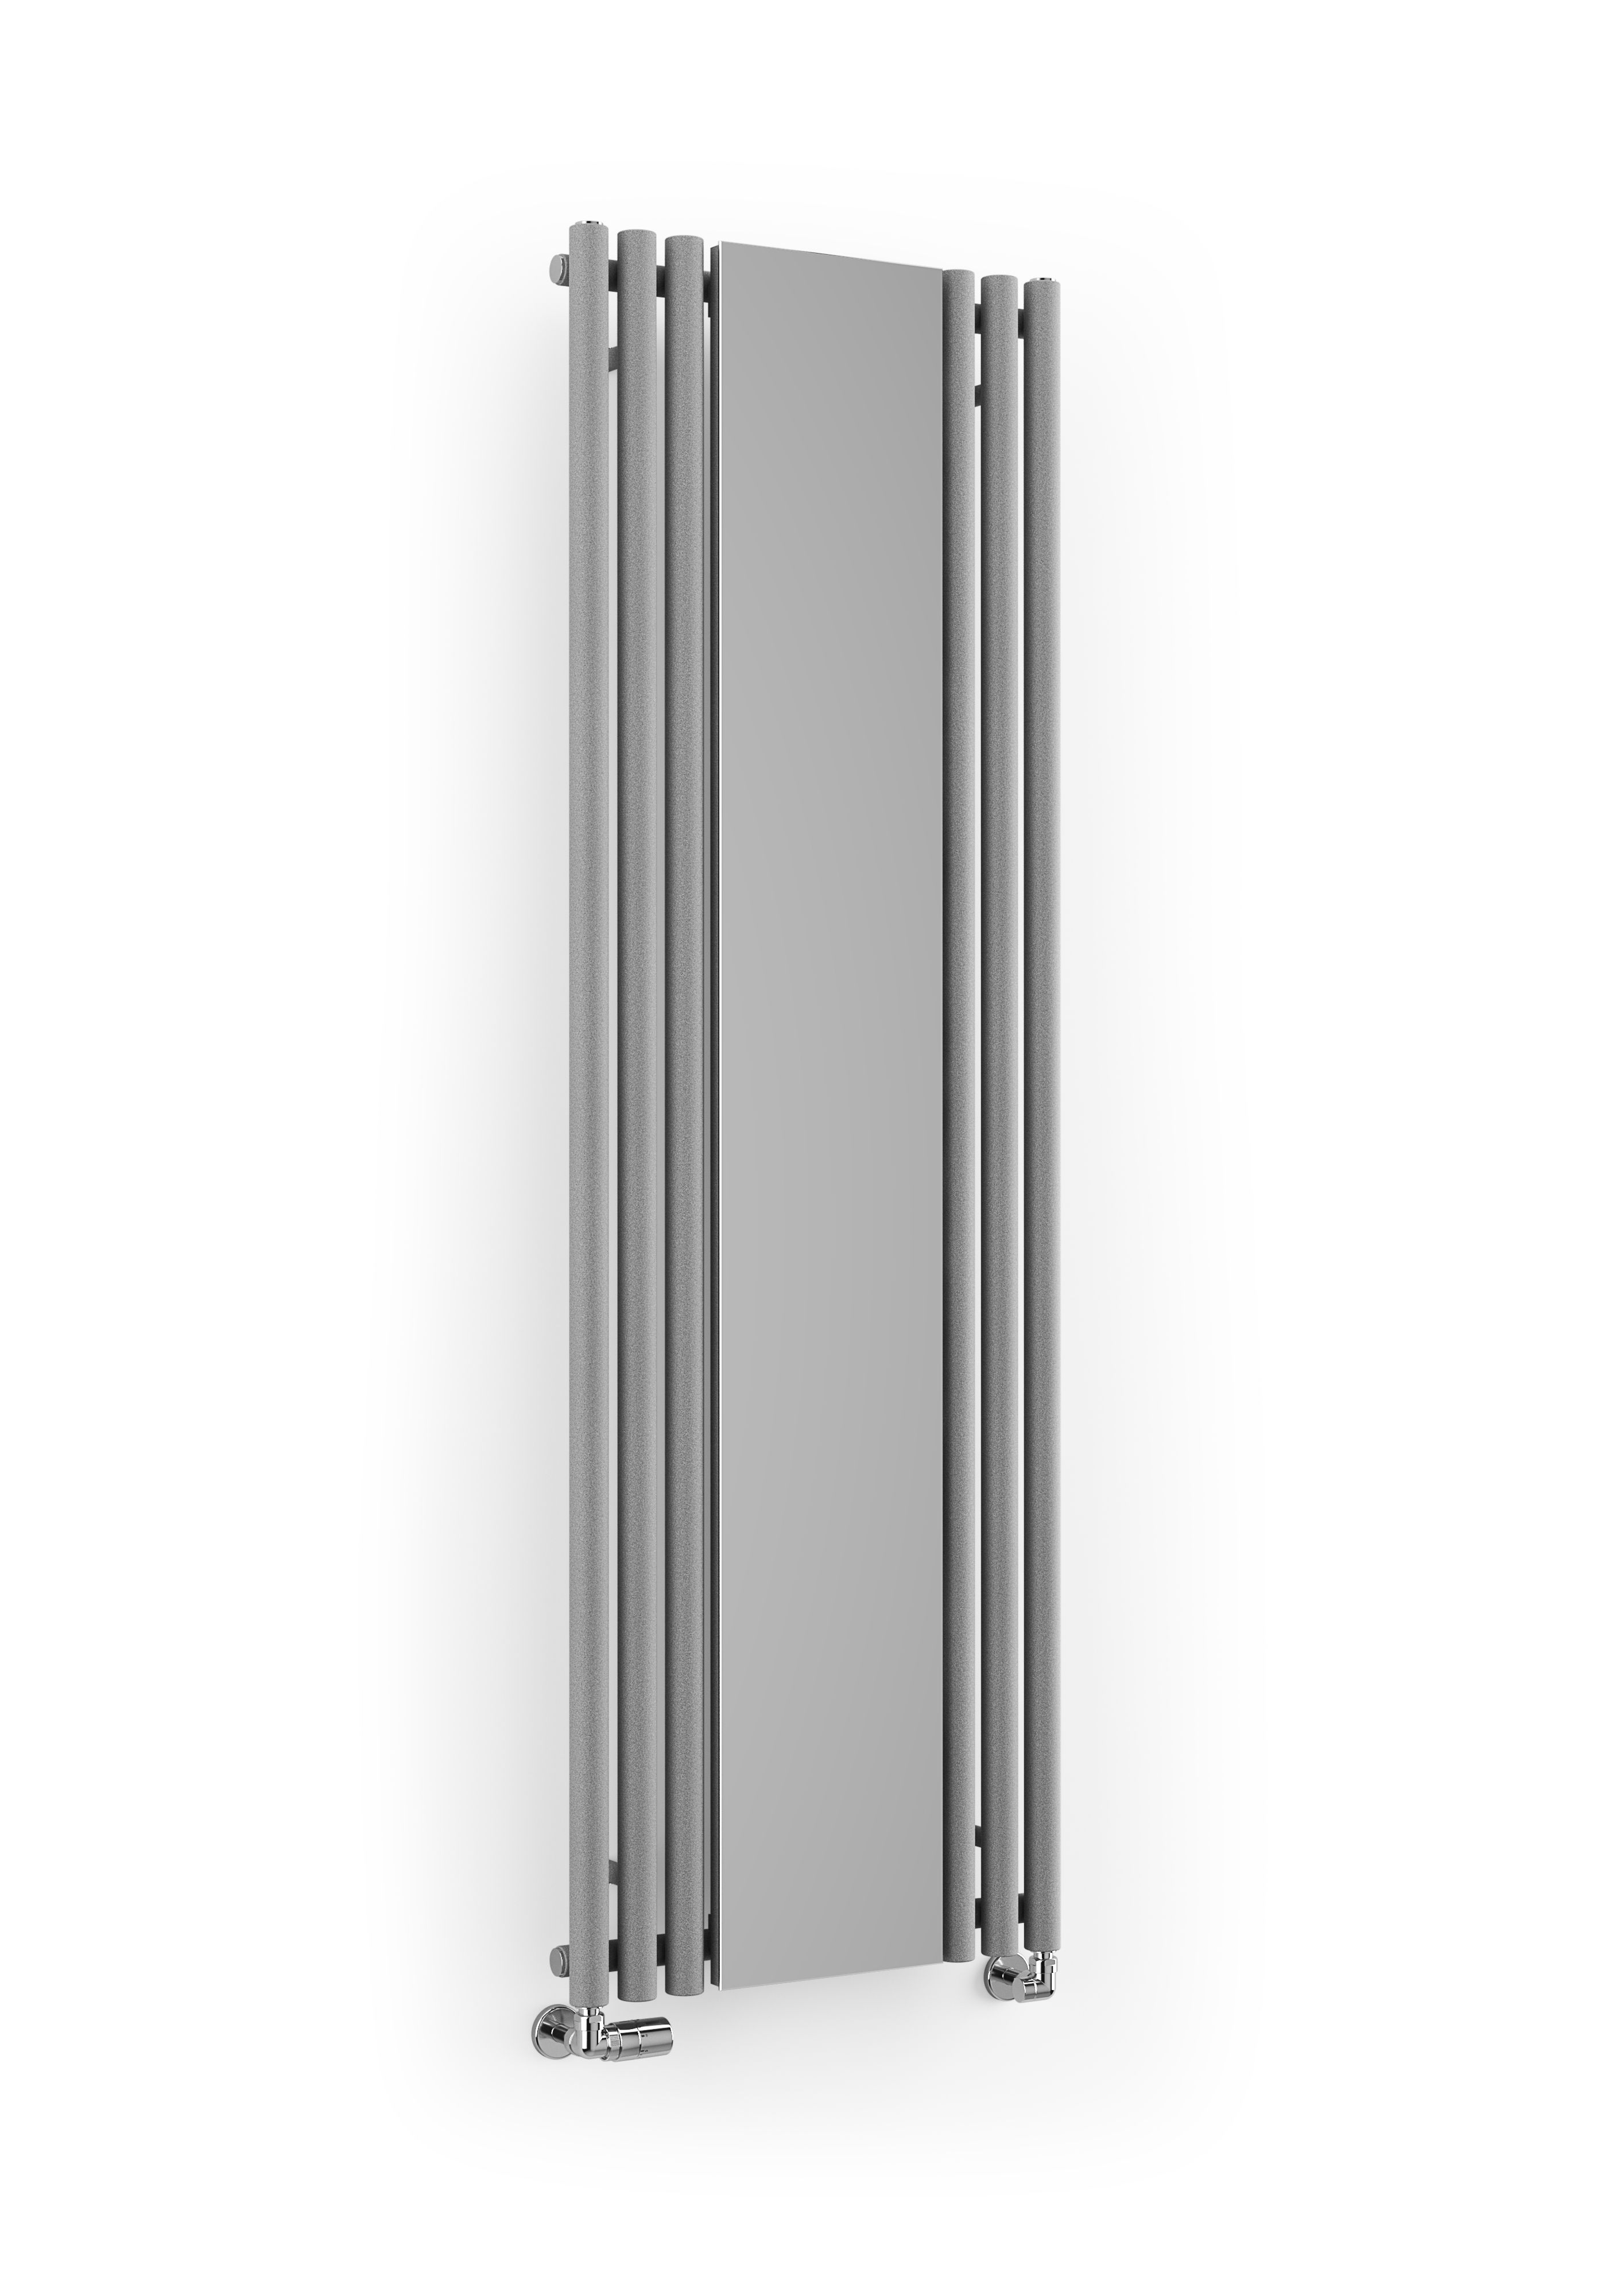 Terma Rolo mirror Salt n pepper Vertical Designer Radiator, (W)590mm x (H)1800mm